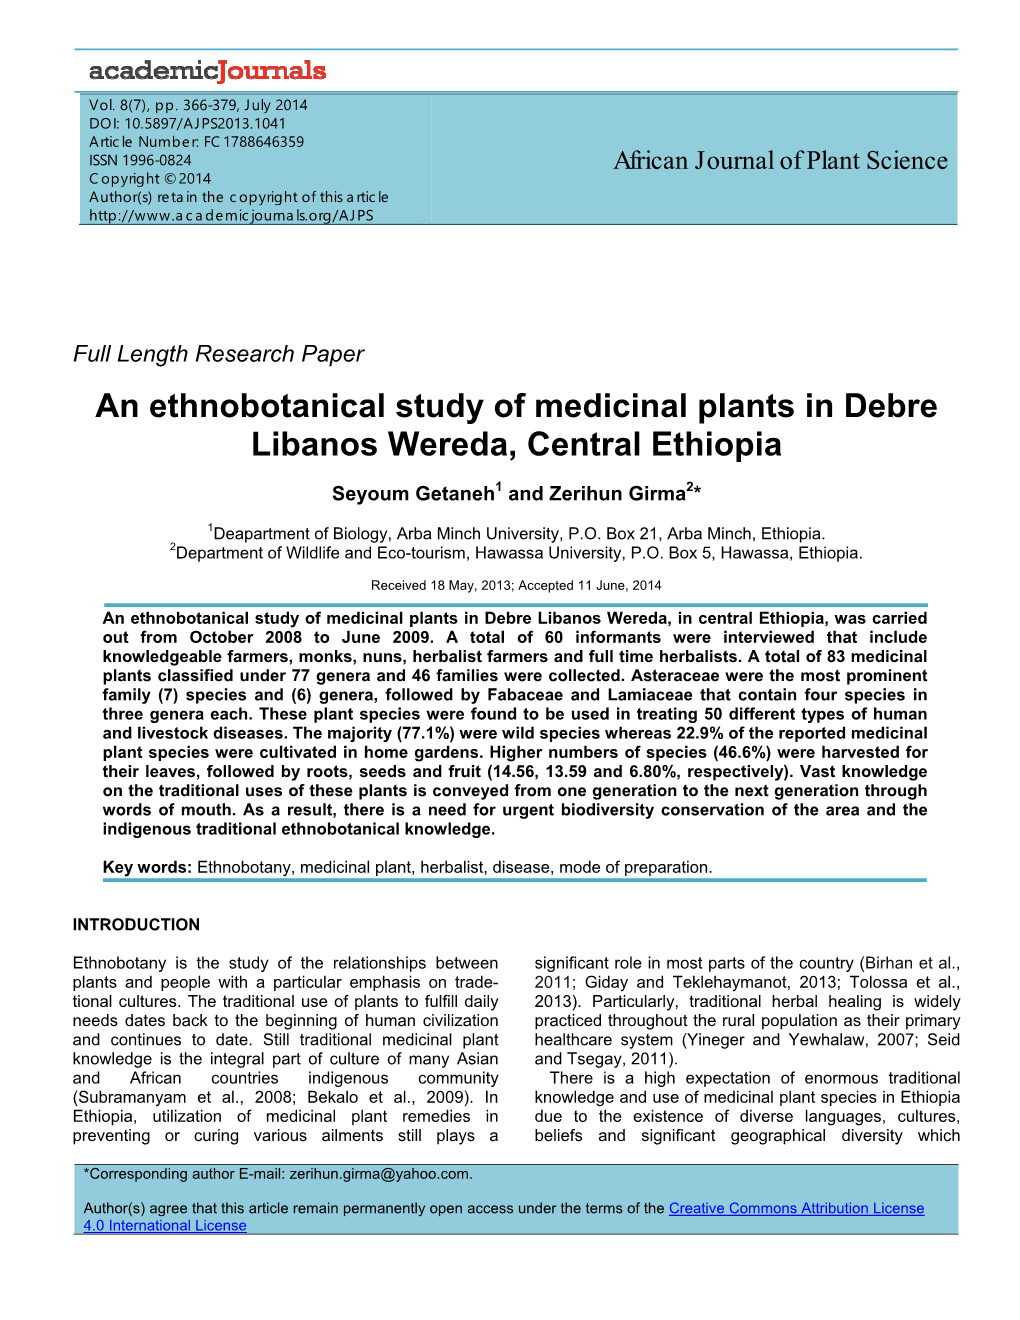 An Ethnobotanical Study of Medicinal Plants in Debre Libanos Wereda, Central Ethiopia